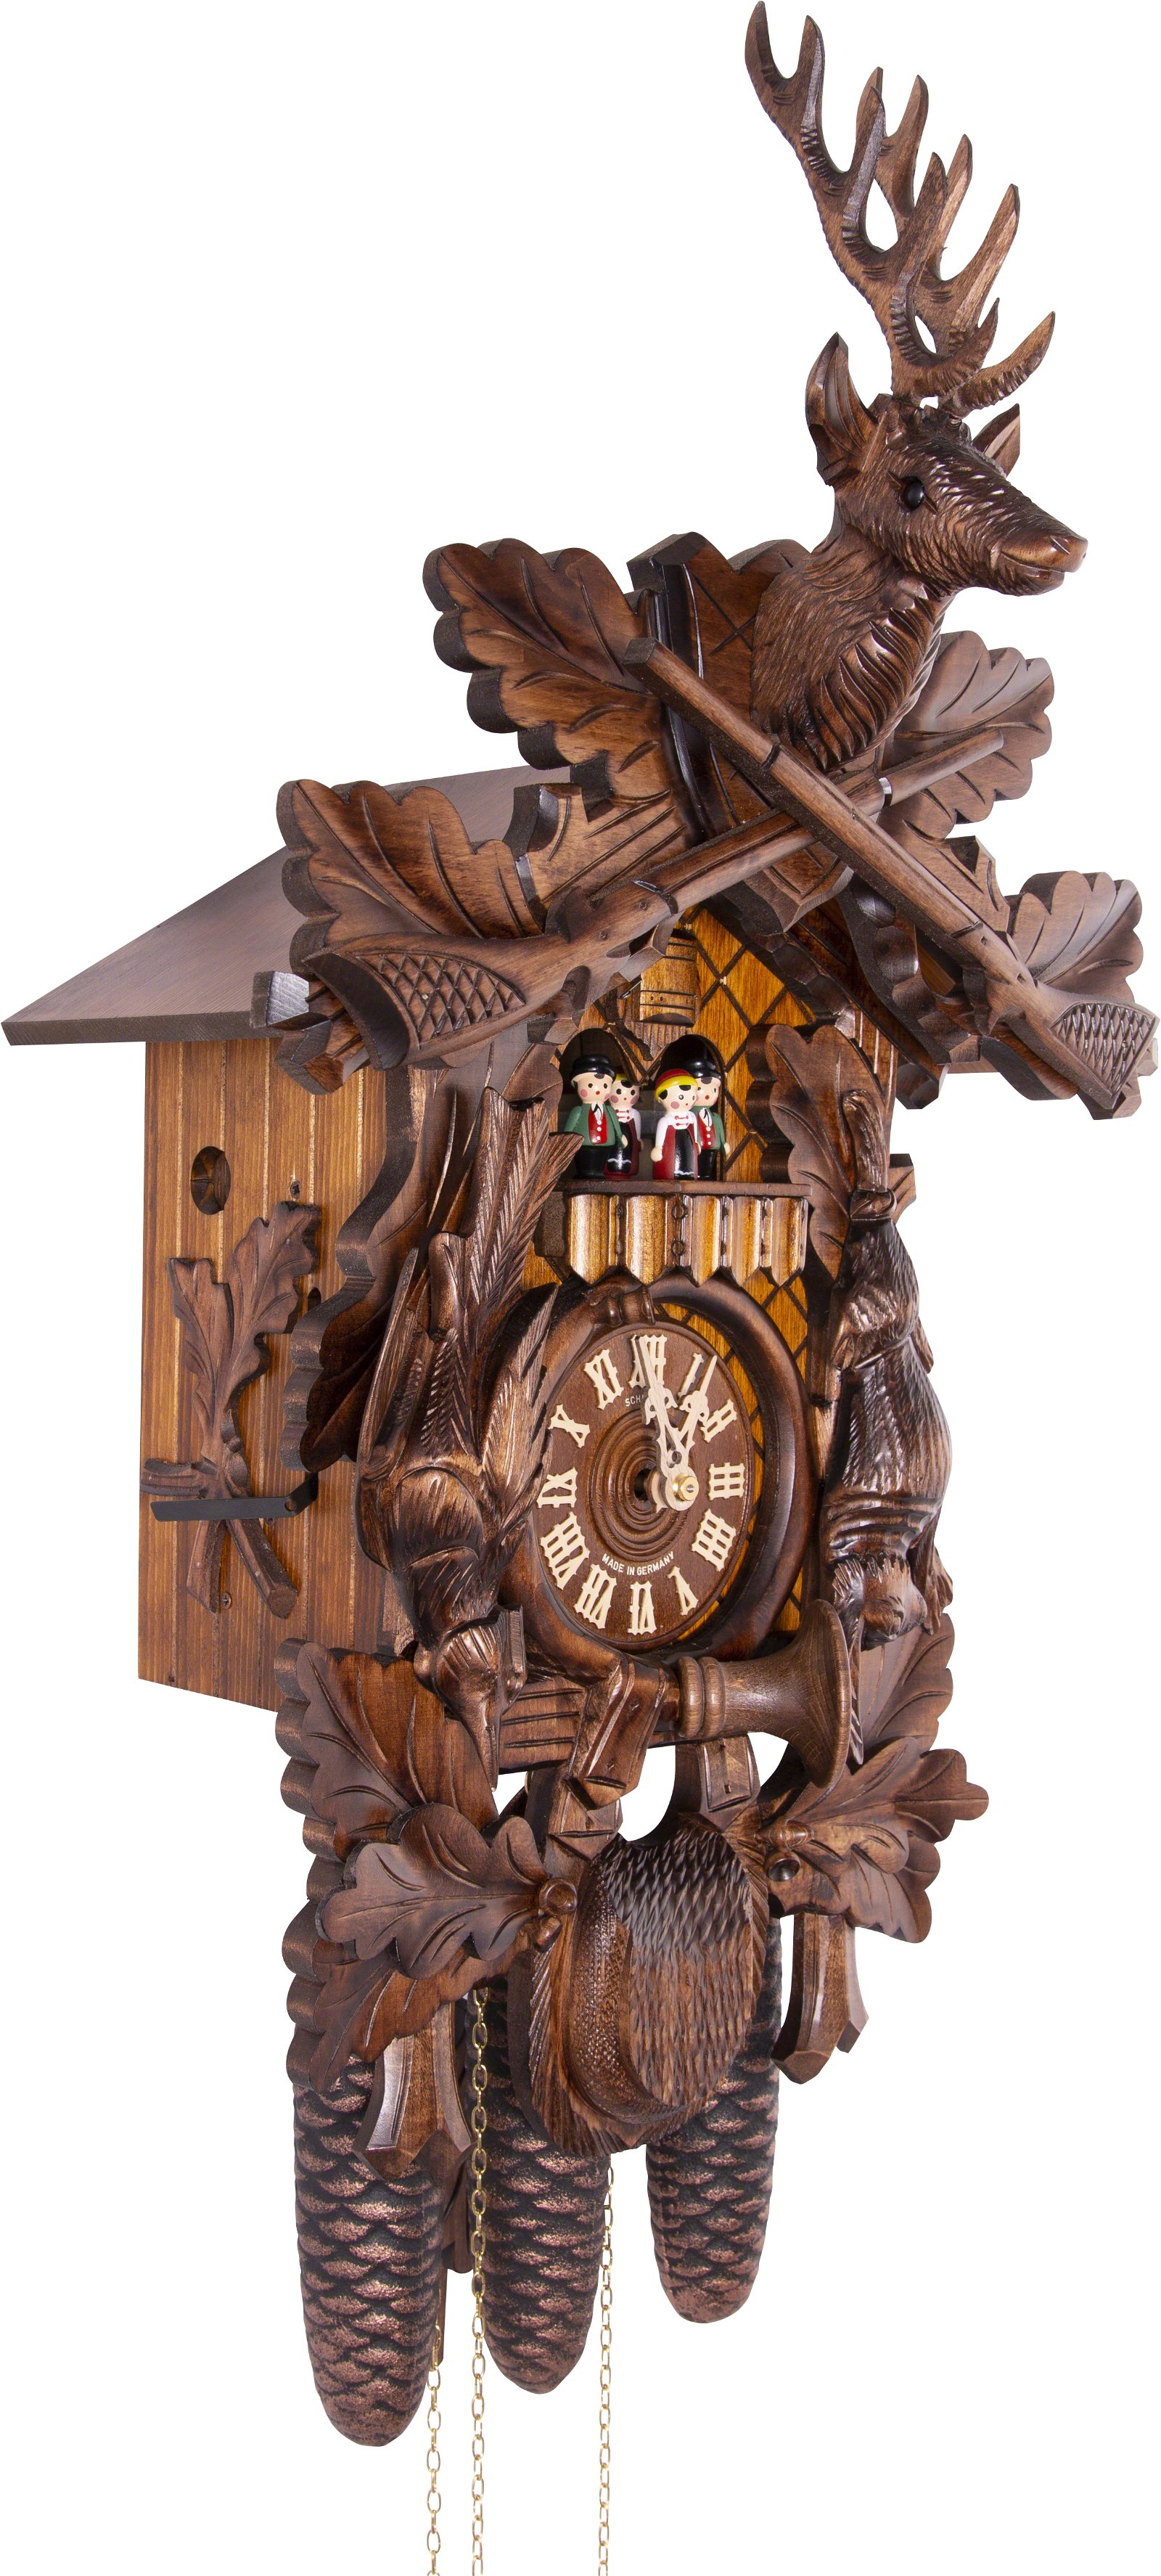 Reloj de cuco estilo “Madera tallada” movimiento mecánico de 8 días 60cm de Anton Schneider